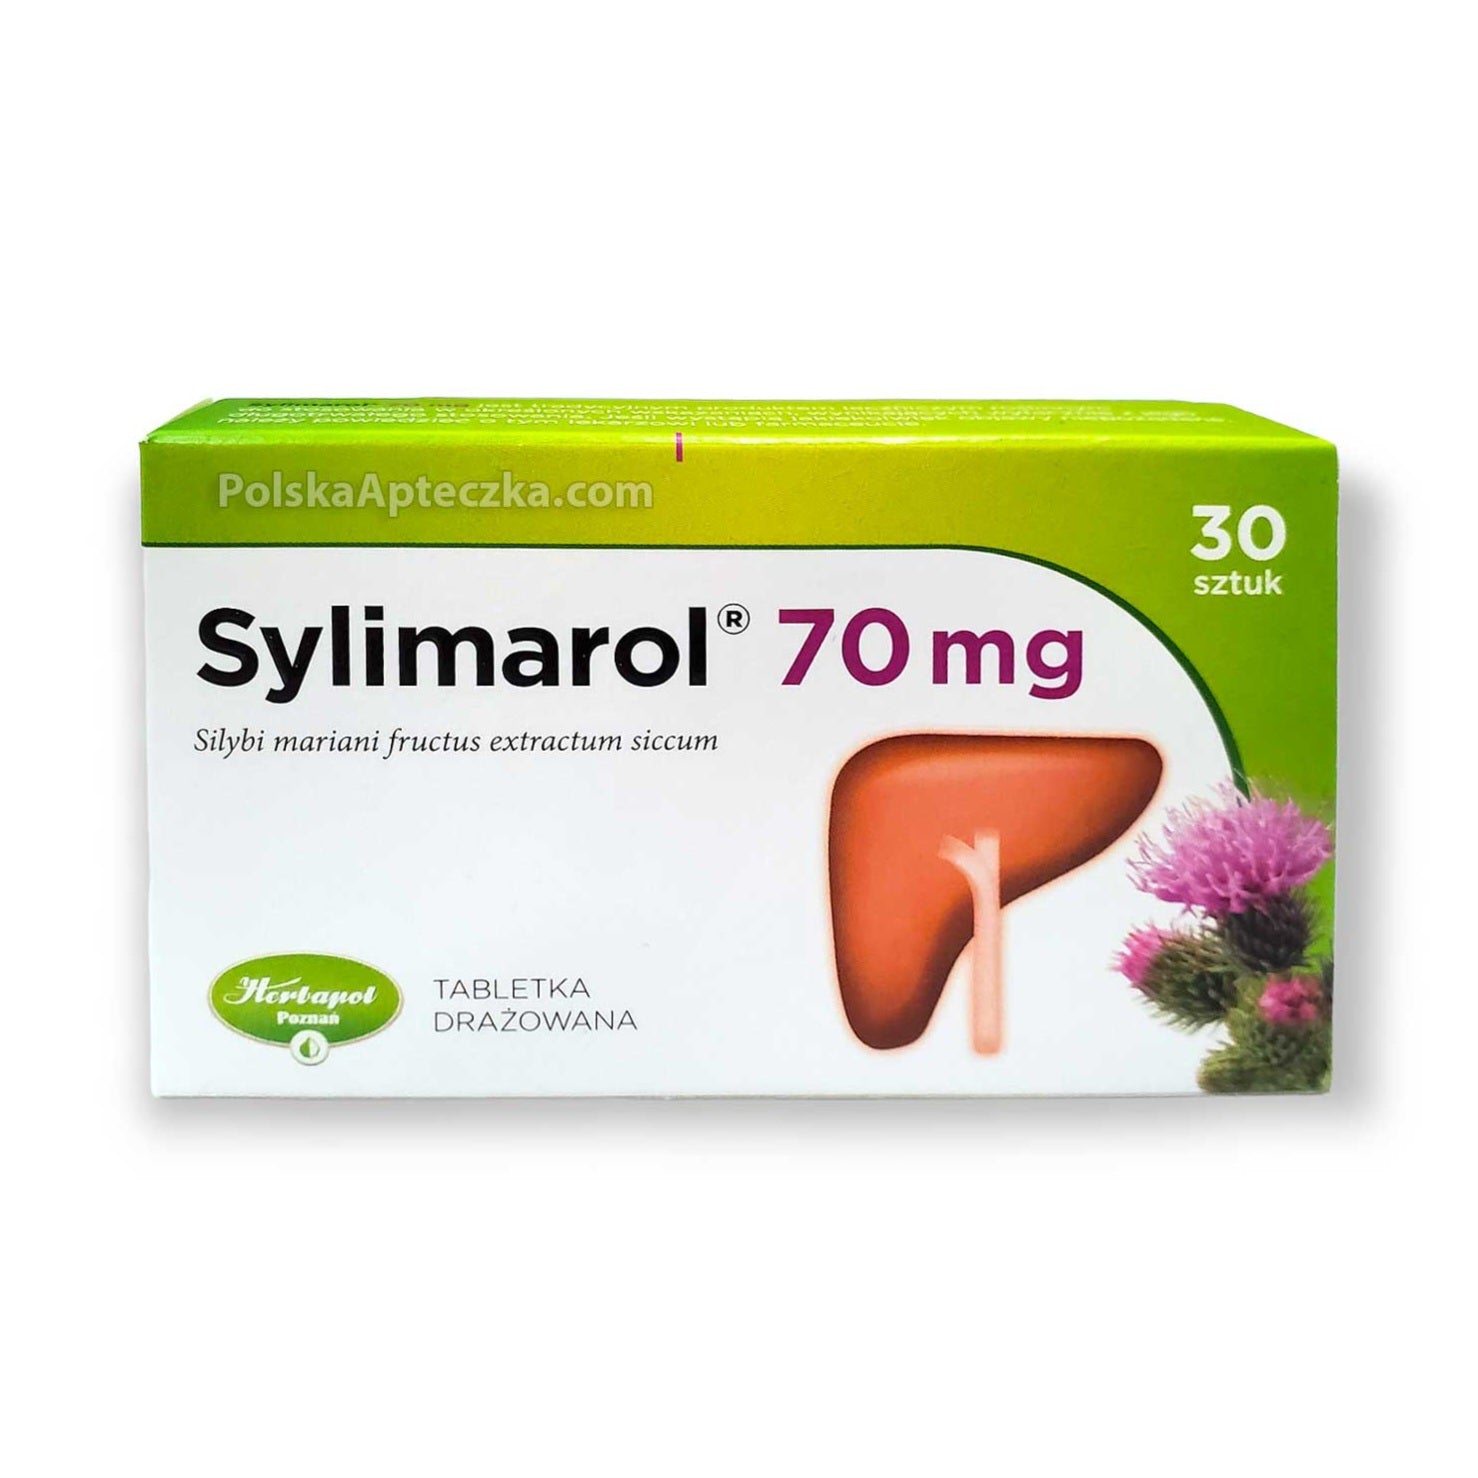 Sylimarol 70mg tablets